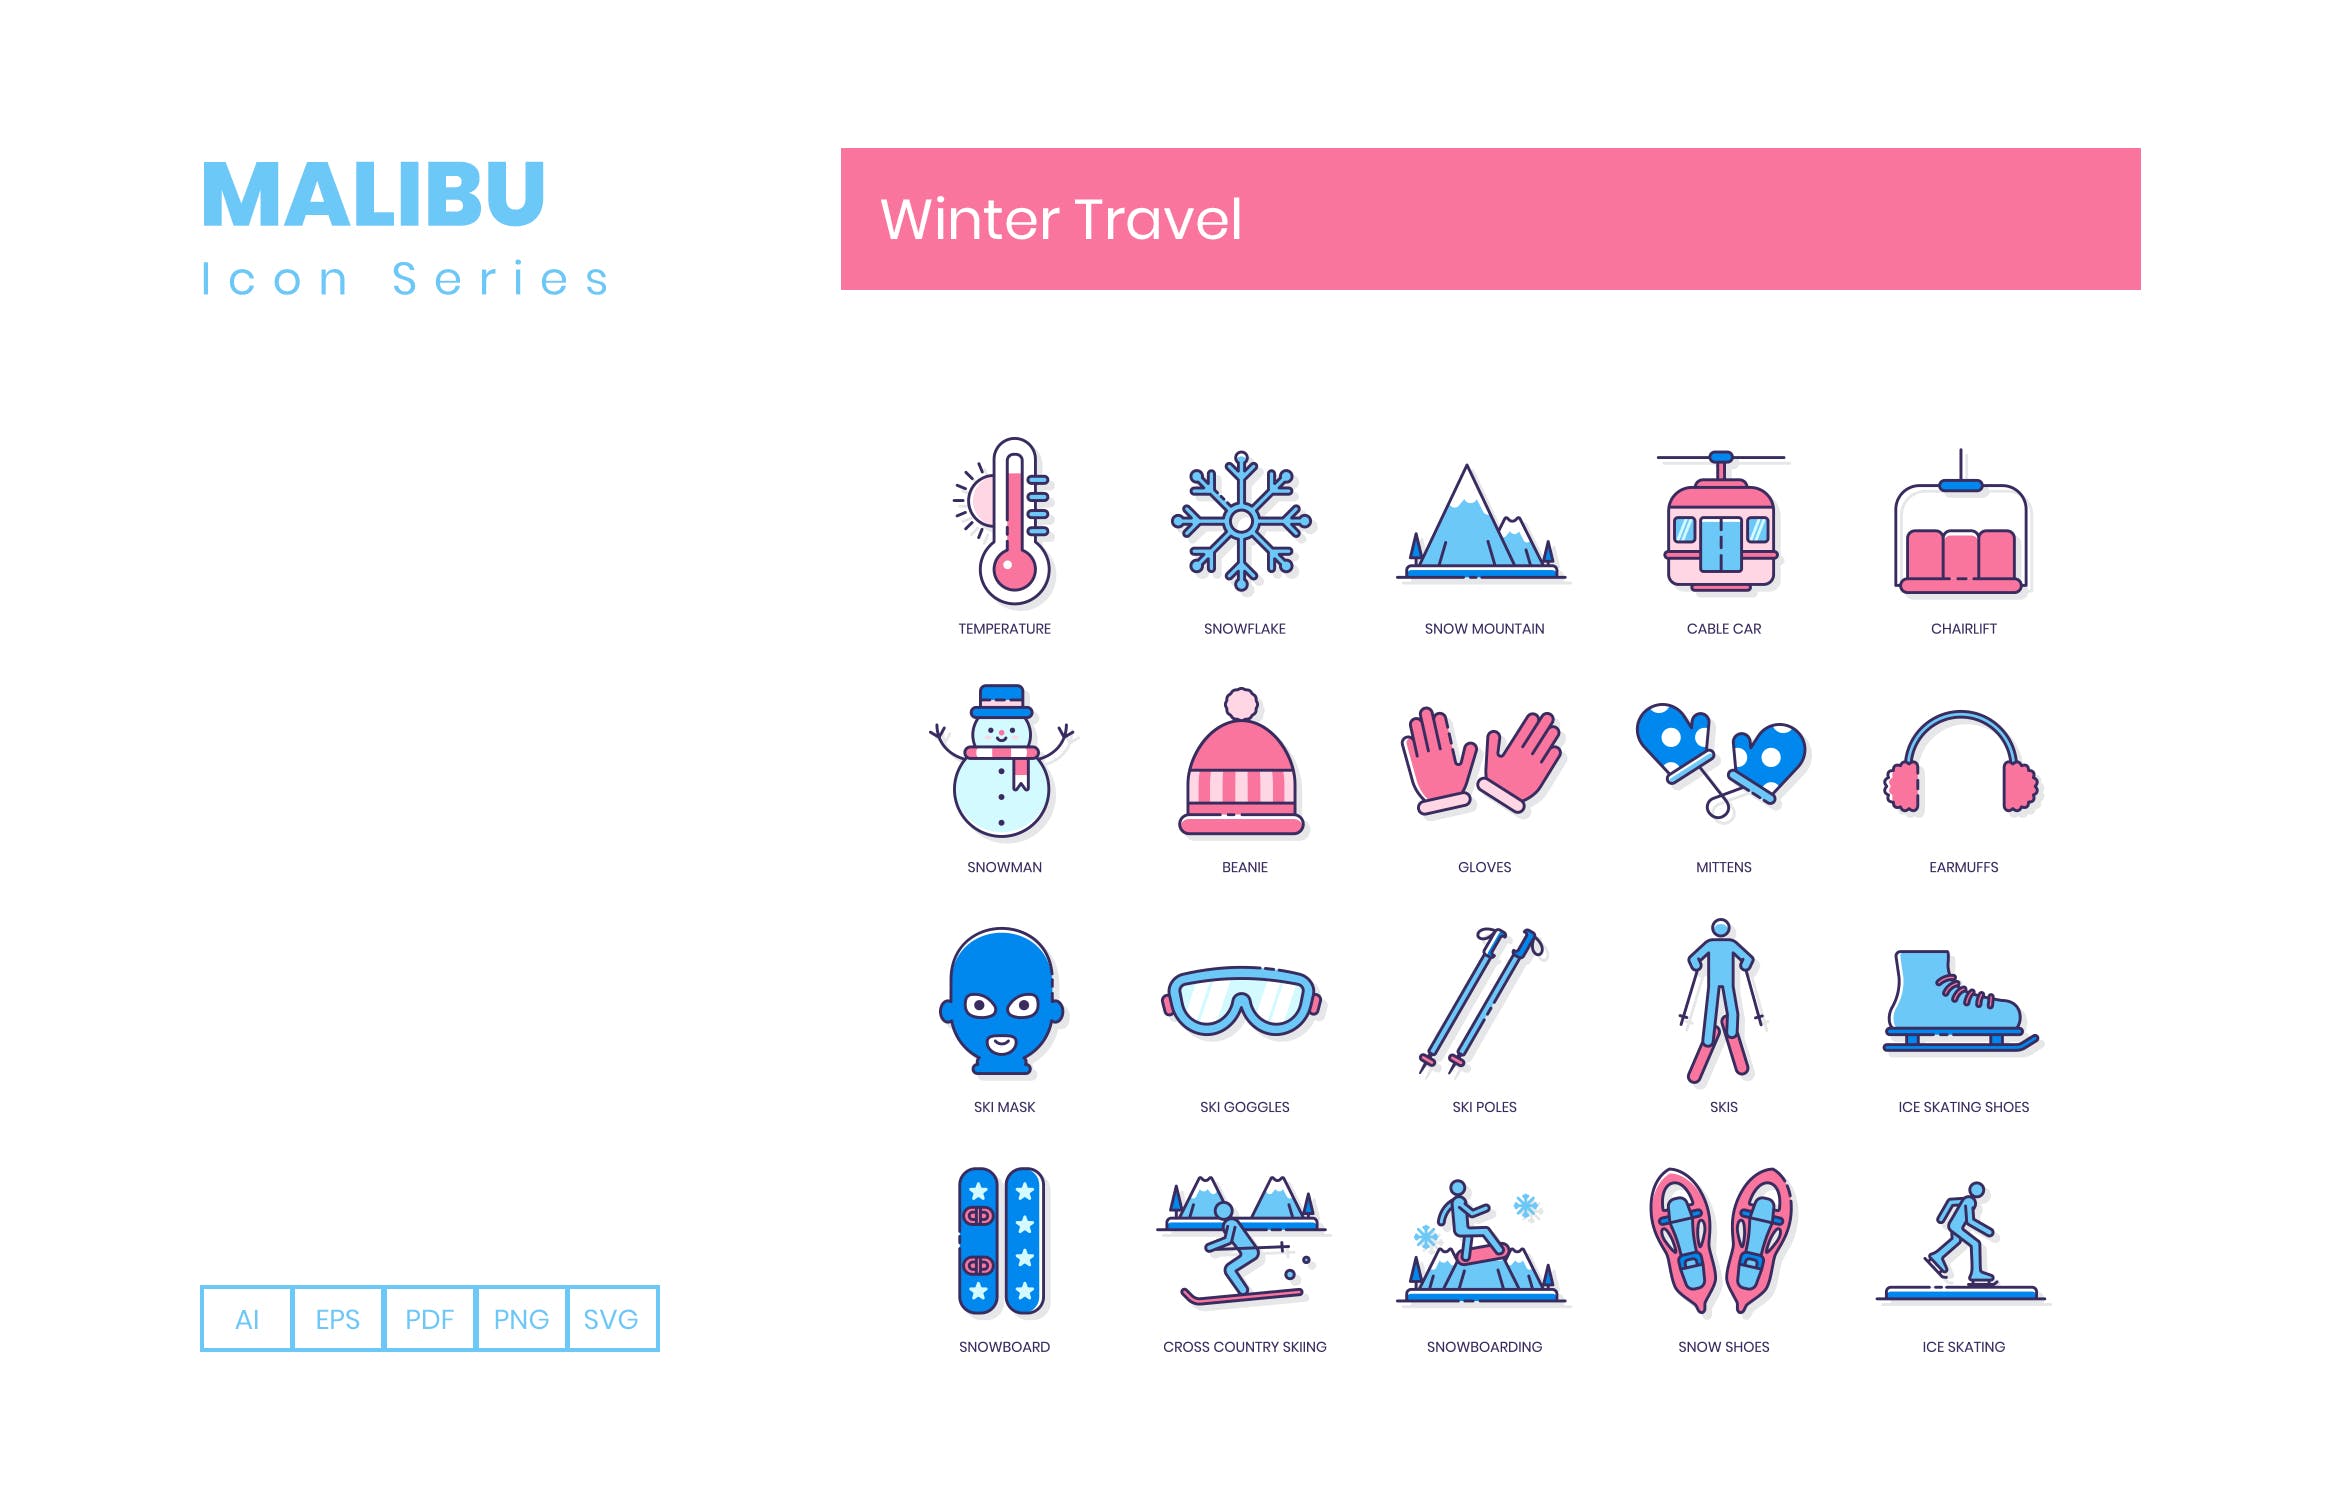 Malibu系列-85枚冬季旅行图标素材 85 Winter Travel Icons | Malibu Series插图(1)